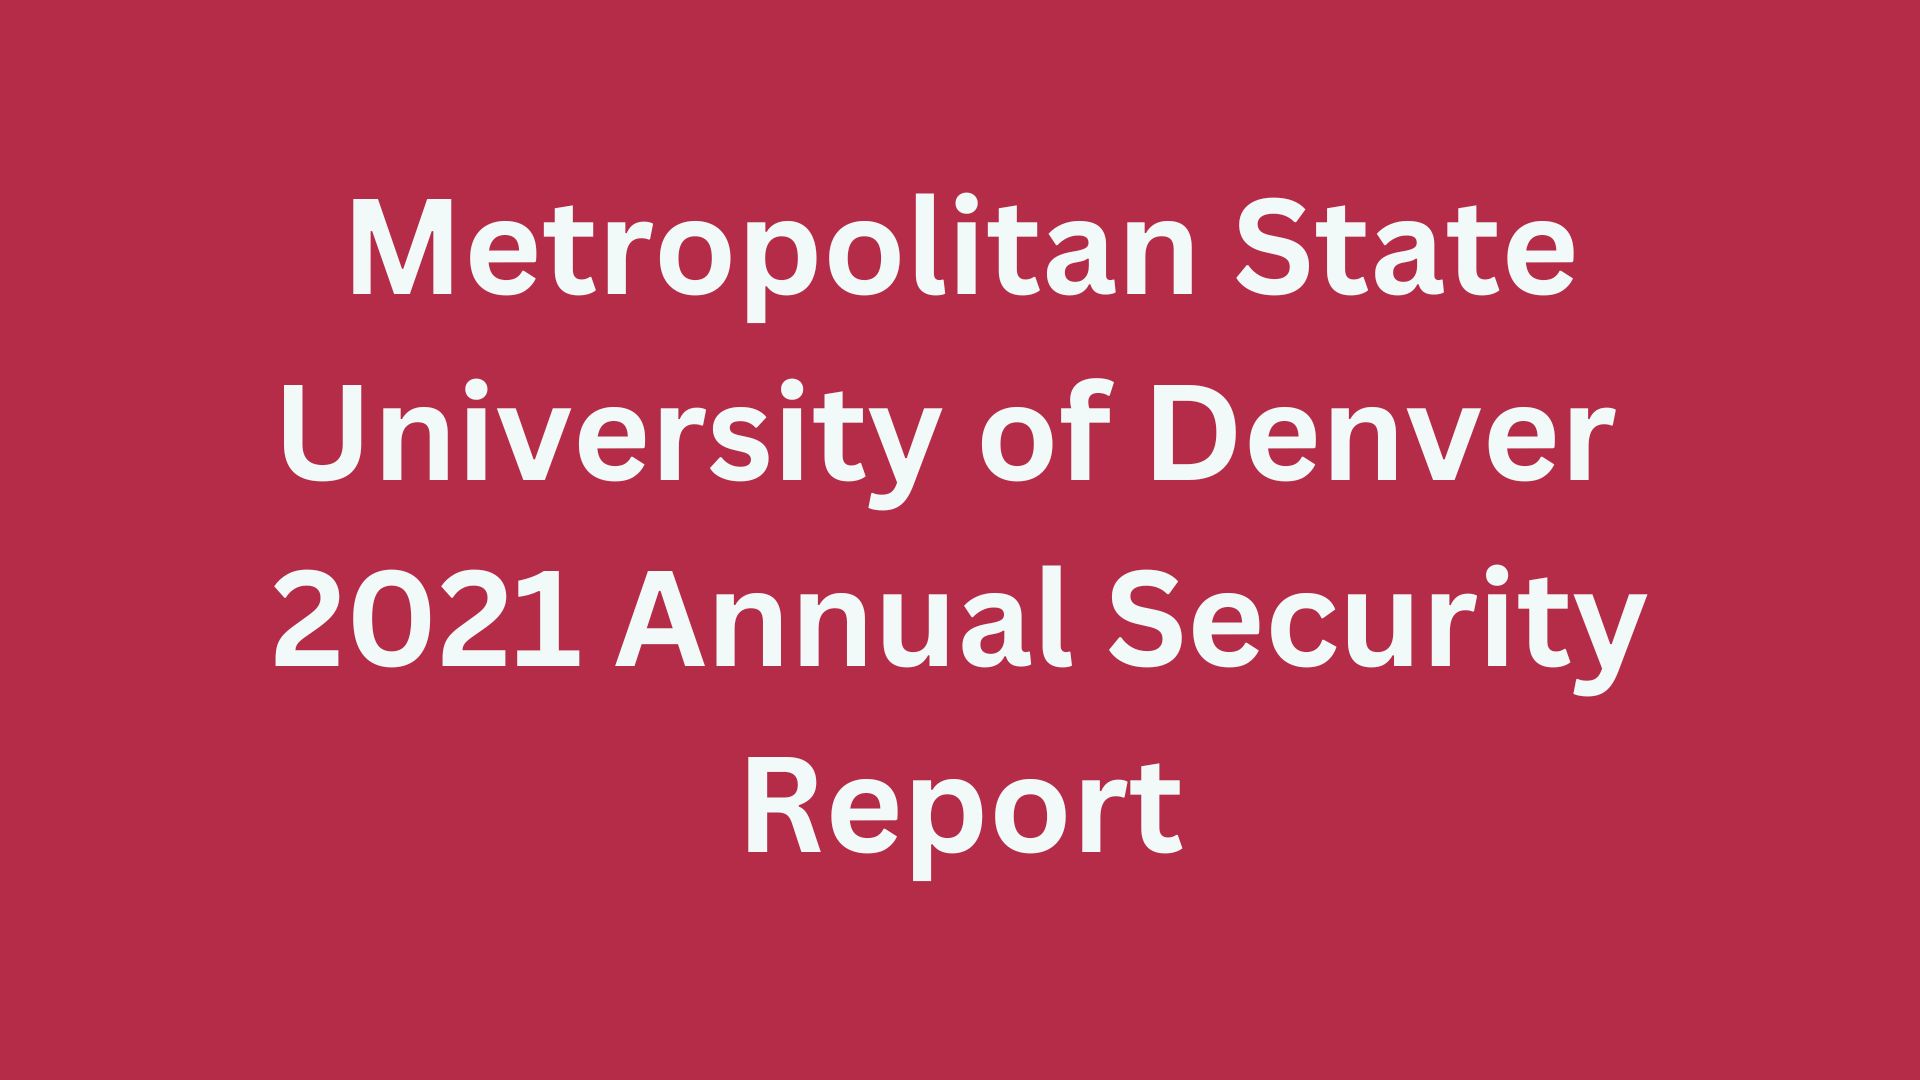 Metropolitan State University of Denver 2021 Annual Security Report graphic